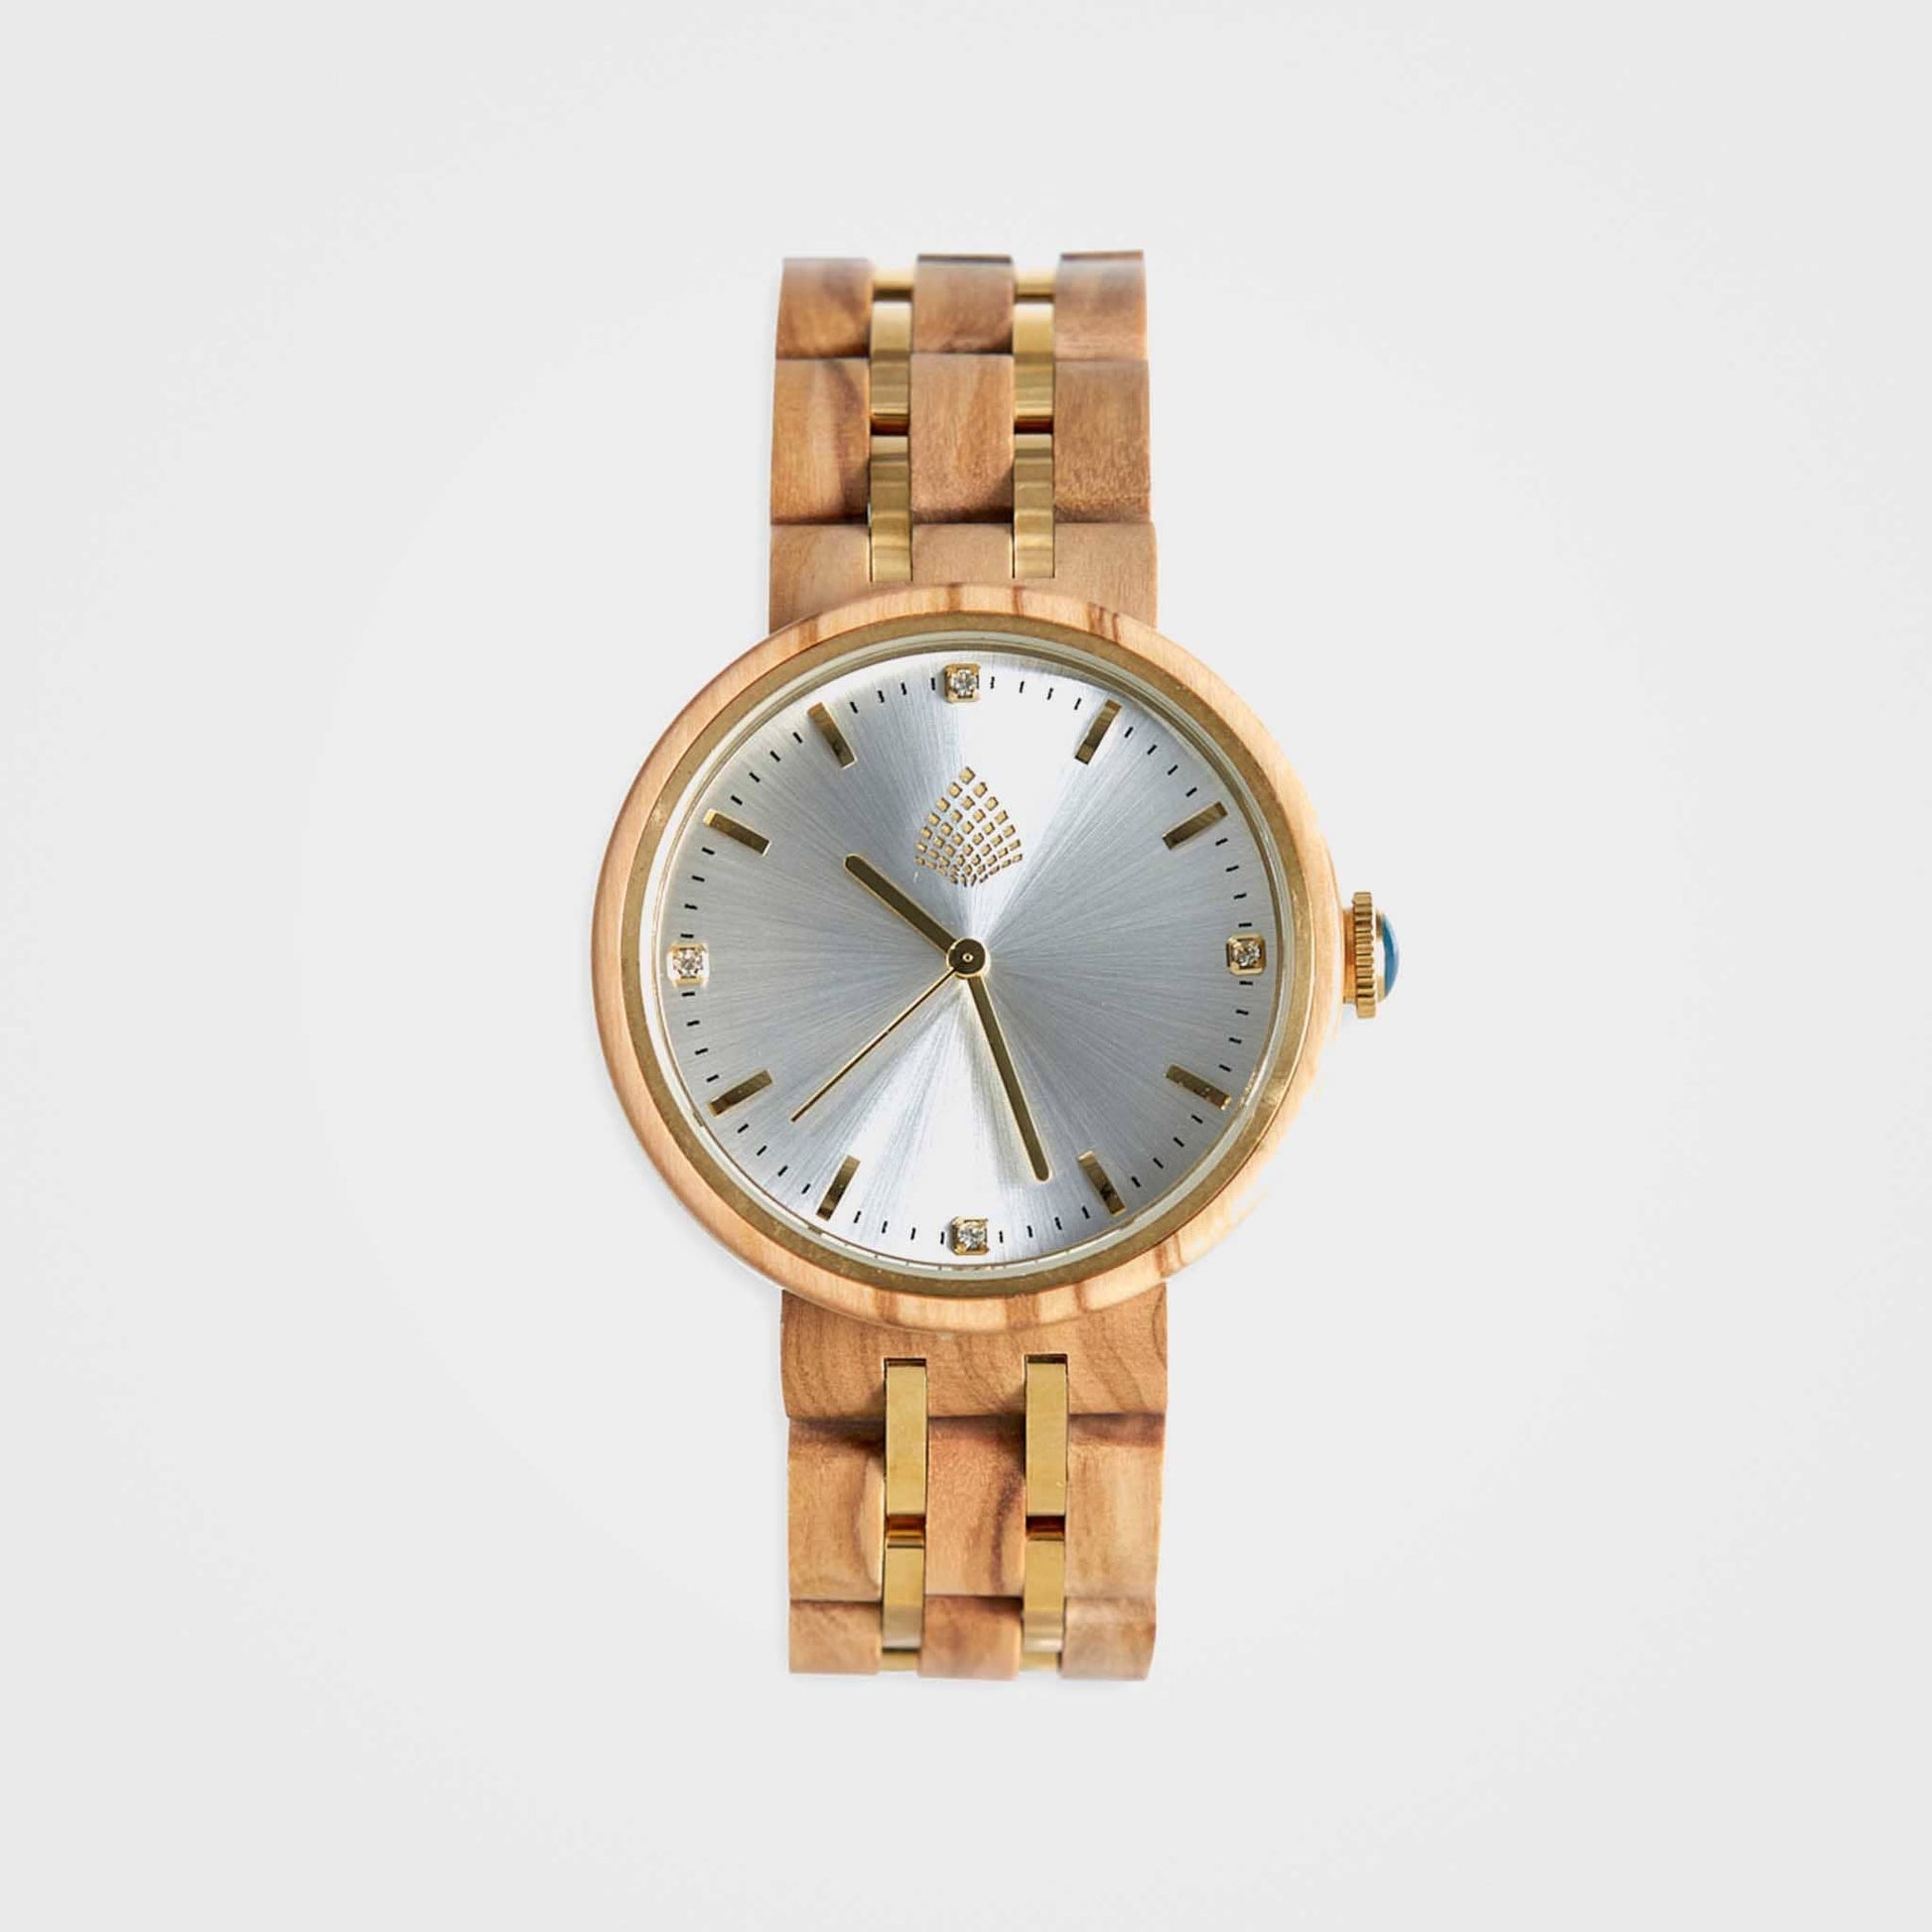 Handmade Casual Wristwatch For Men: The Teak